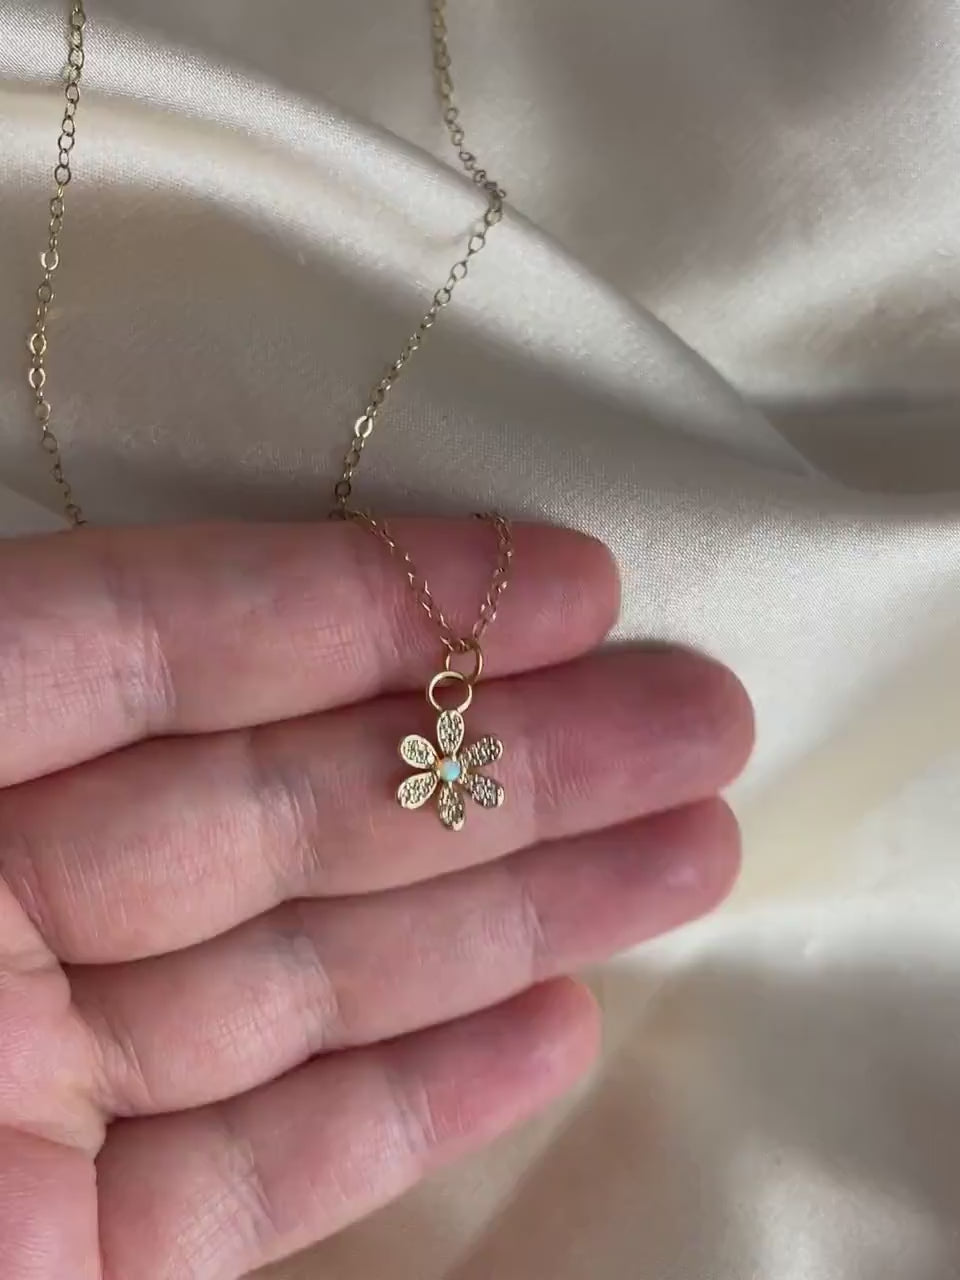 Opal Flower Charm Necklace Gold, Minimalist Cubic Zirconia Pendant For Women, M7-31